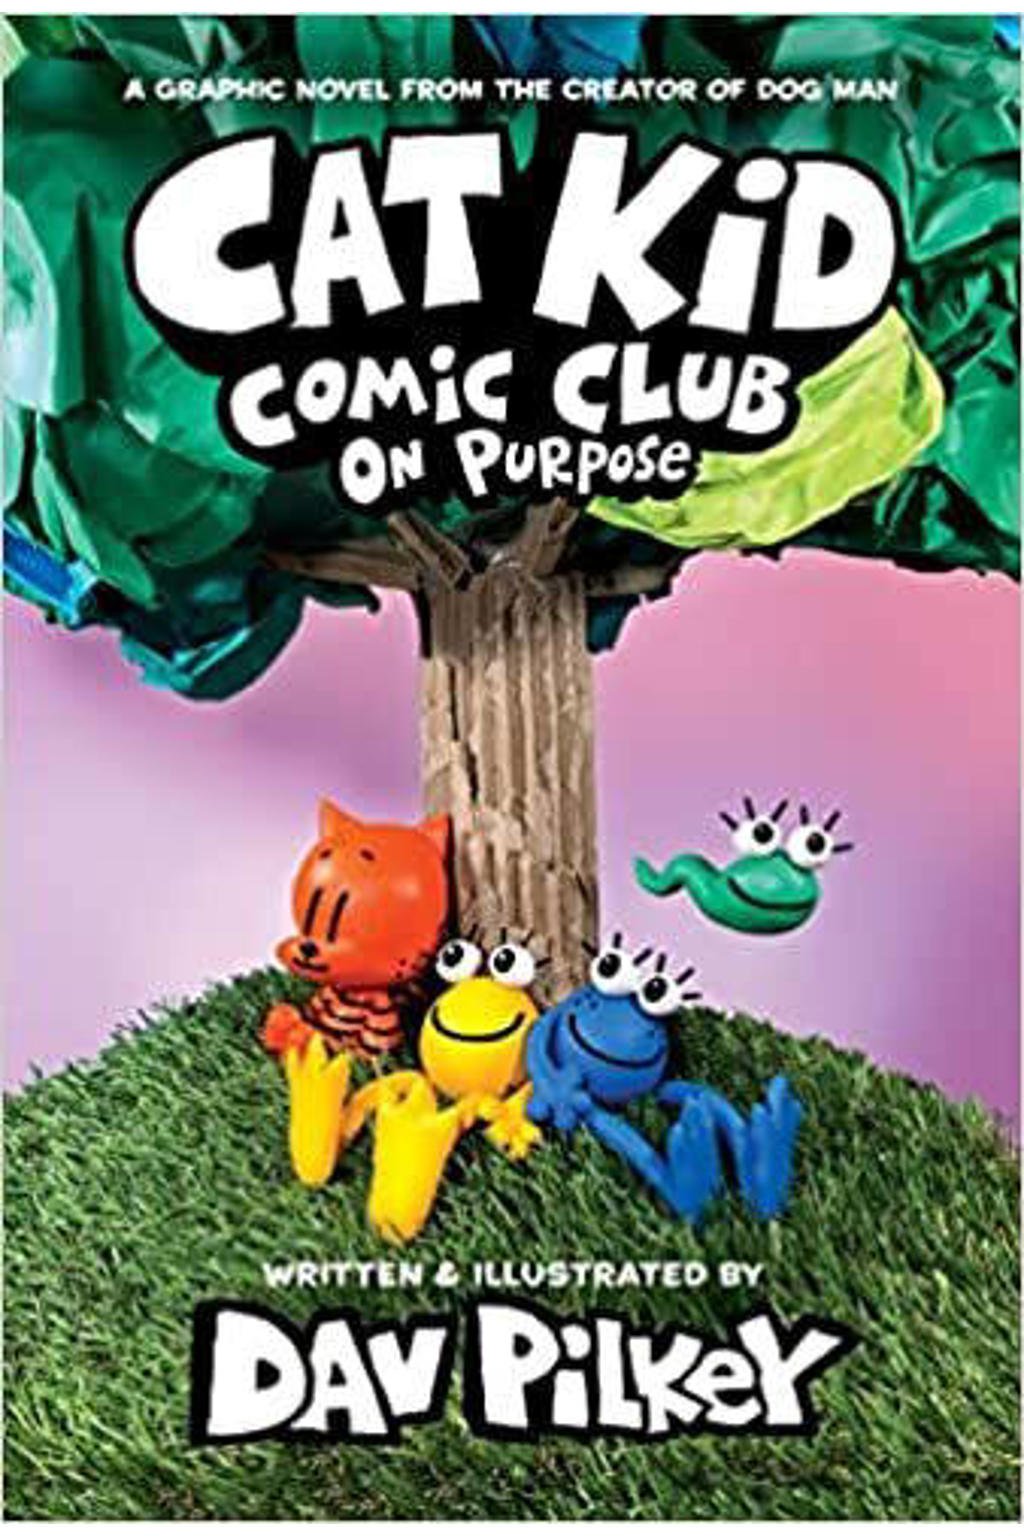 Cat Kid Comic Club: On Purpose: A Graphic Novel (Cat Kid Comic Club #3): From the Creator of Dog Man - Pilkey, Dav